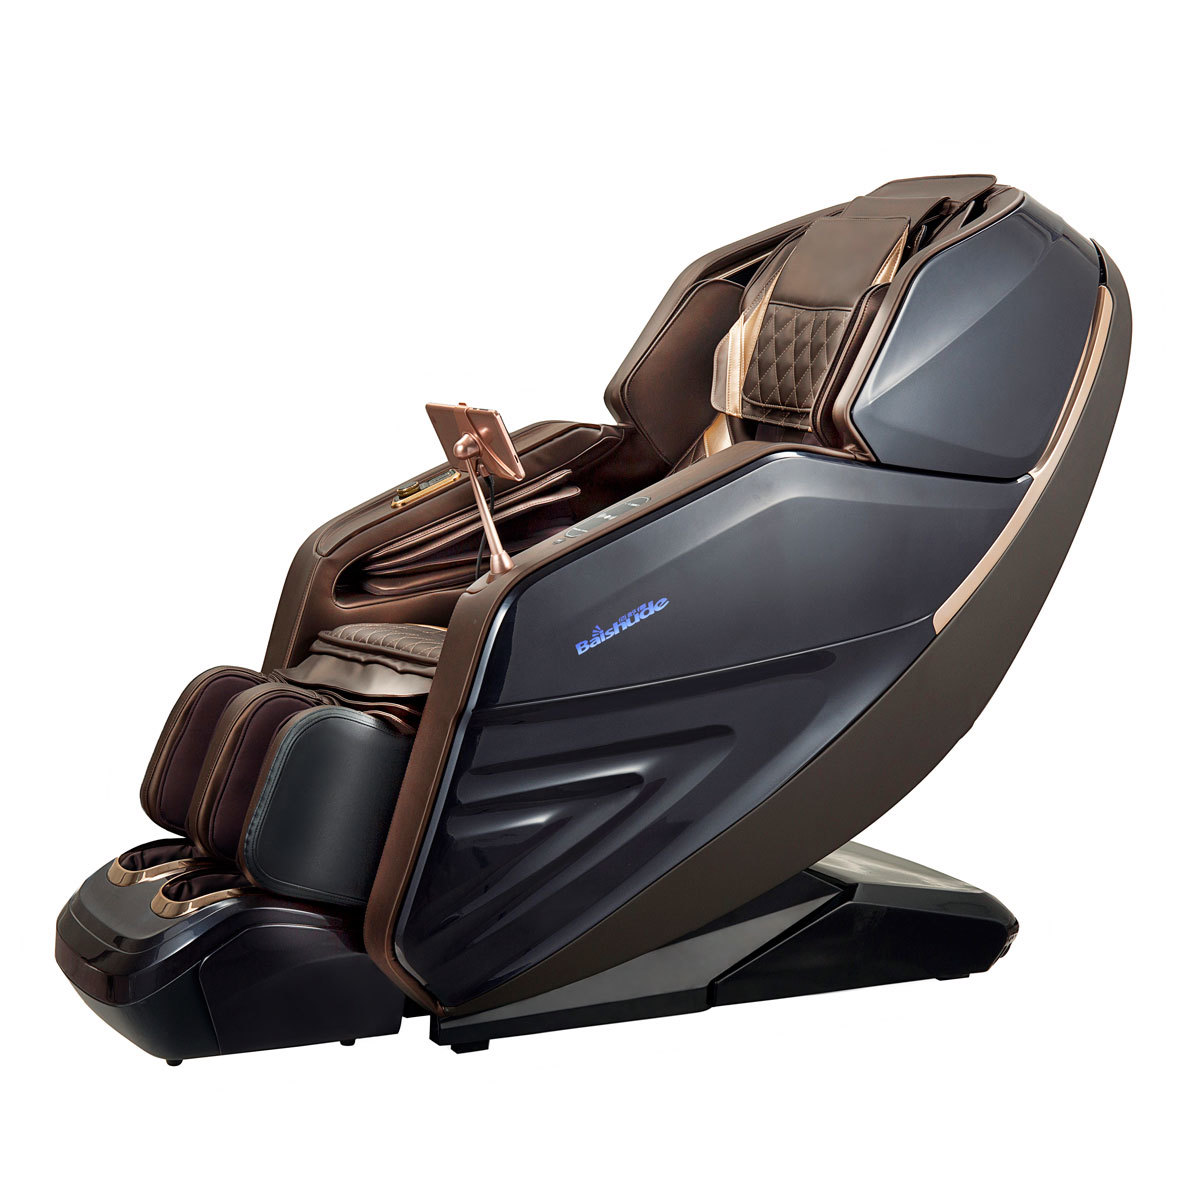 Deluxe massage chair MC-825